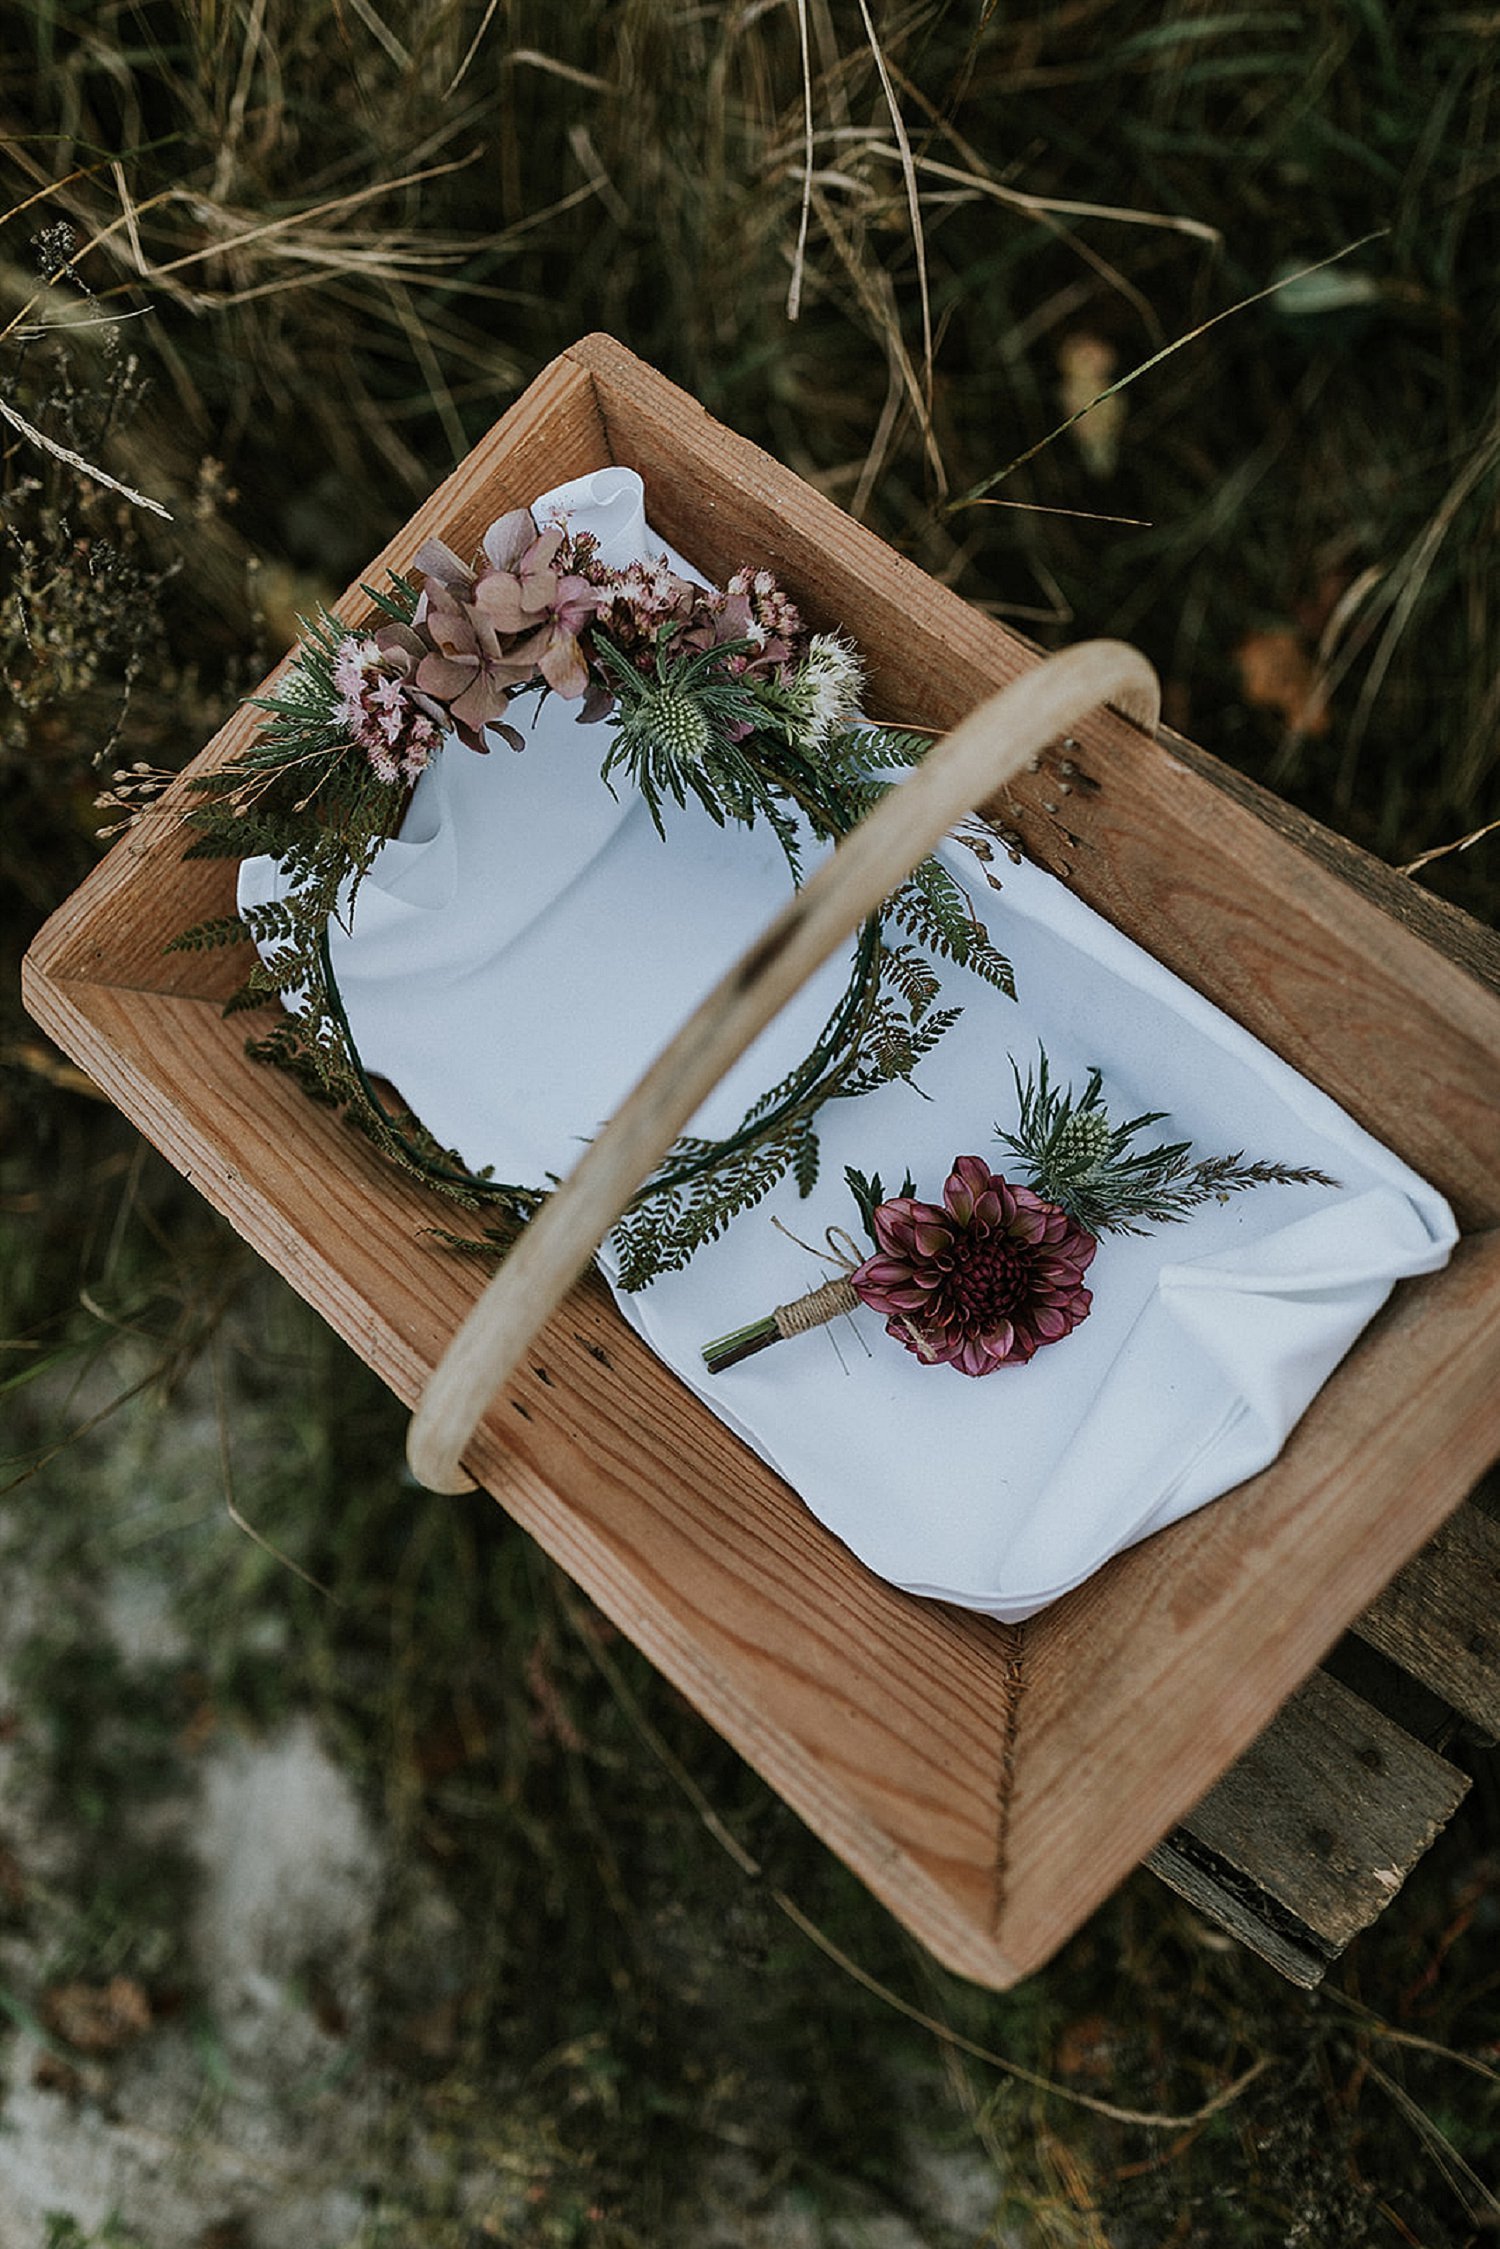 fall autumn wedding flower crown and boutonniere in basket | elope abroad | Aero Island | Danish Island Weddings | Full service Denmark wedding planners 